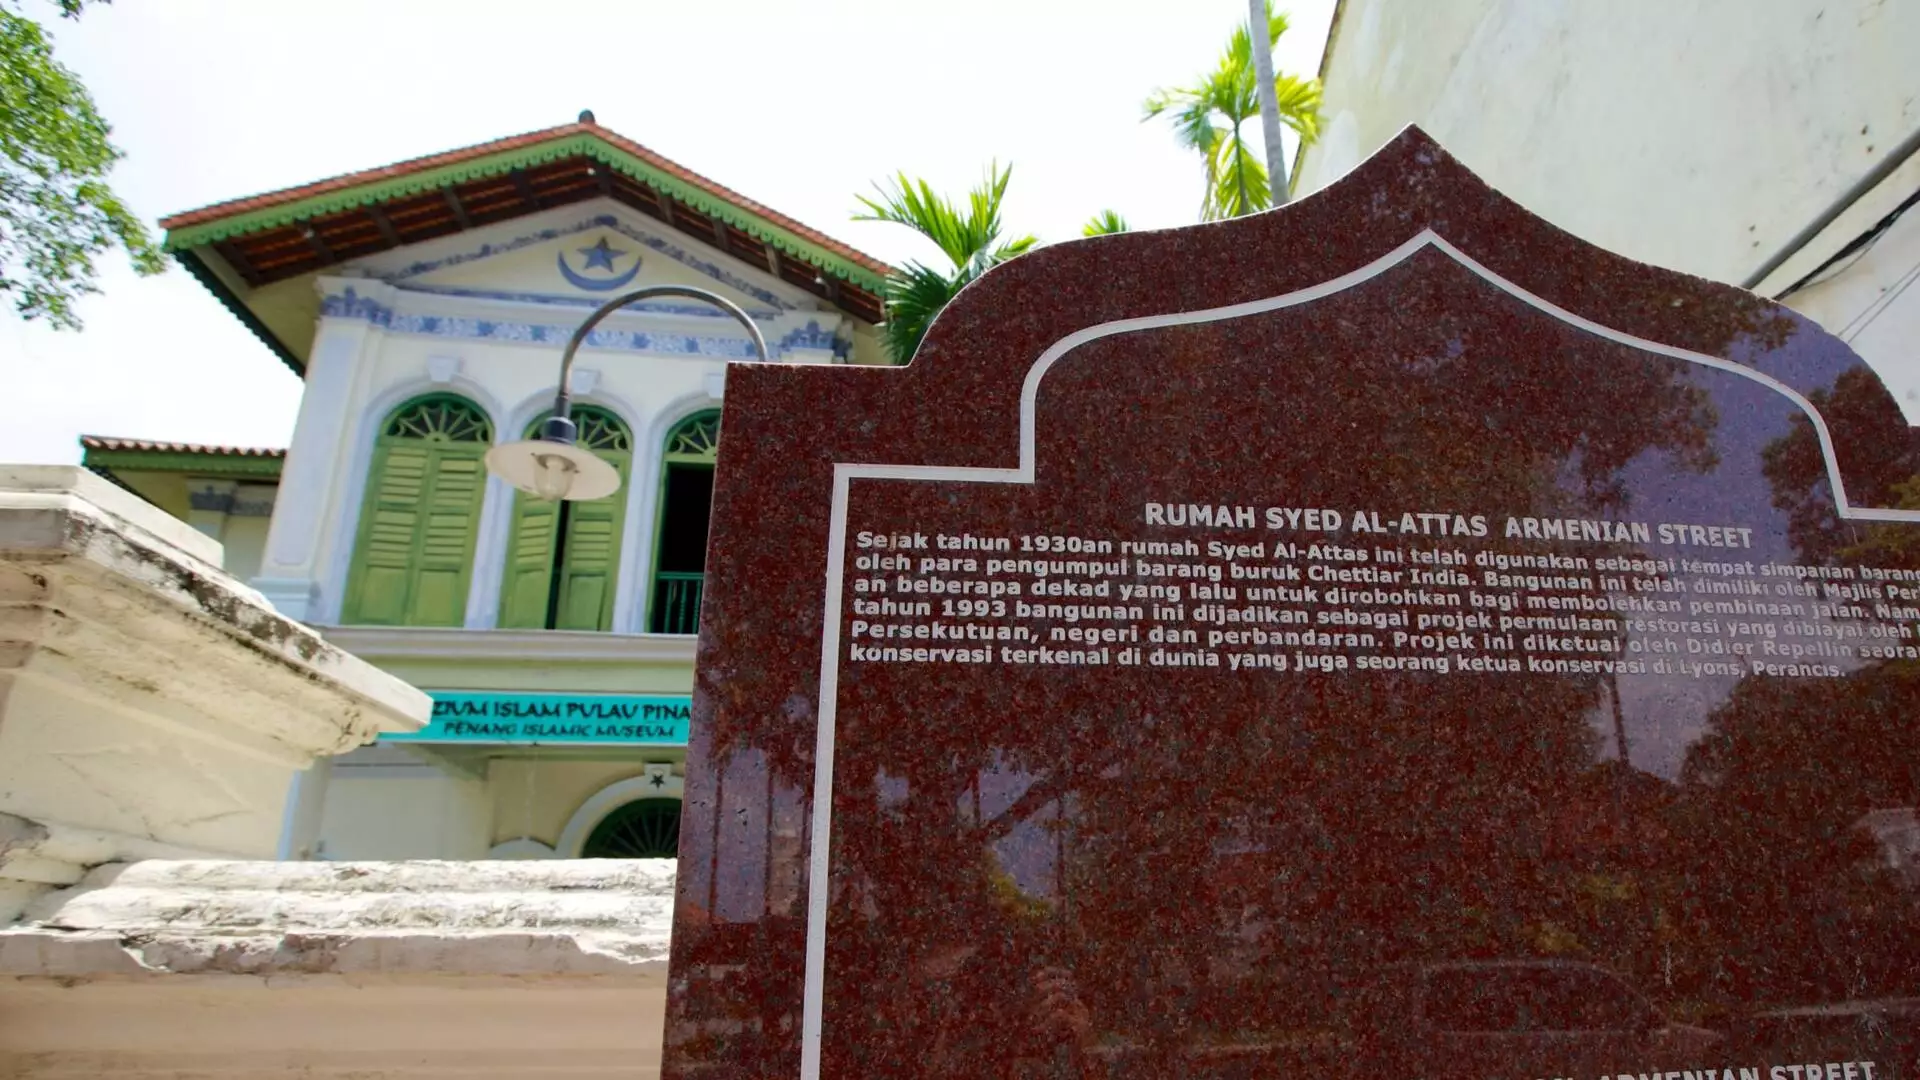 Penang Islamic Museum On Penang Island In Malaysia